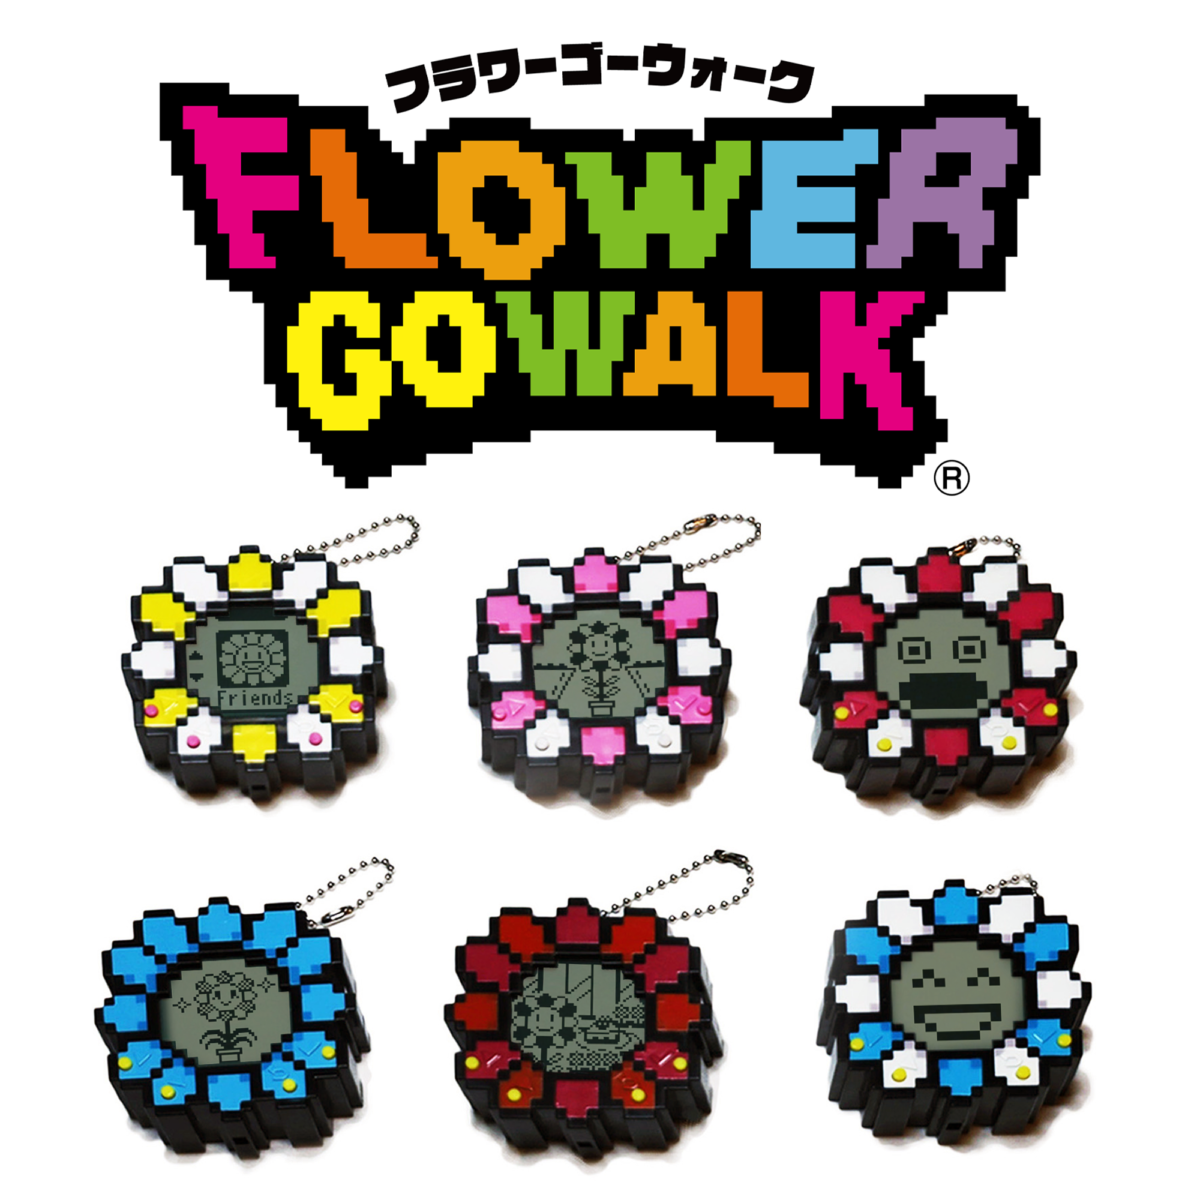 Takashi Murakami / kaikai kiki】 The new game 「Flower Go Walk